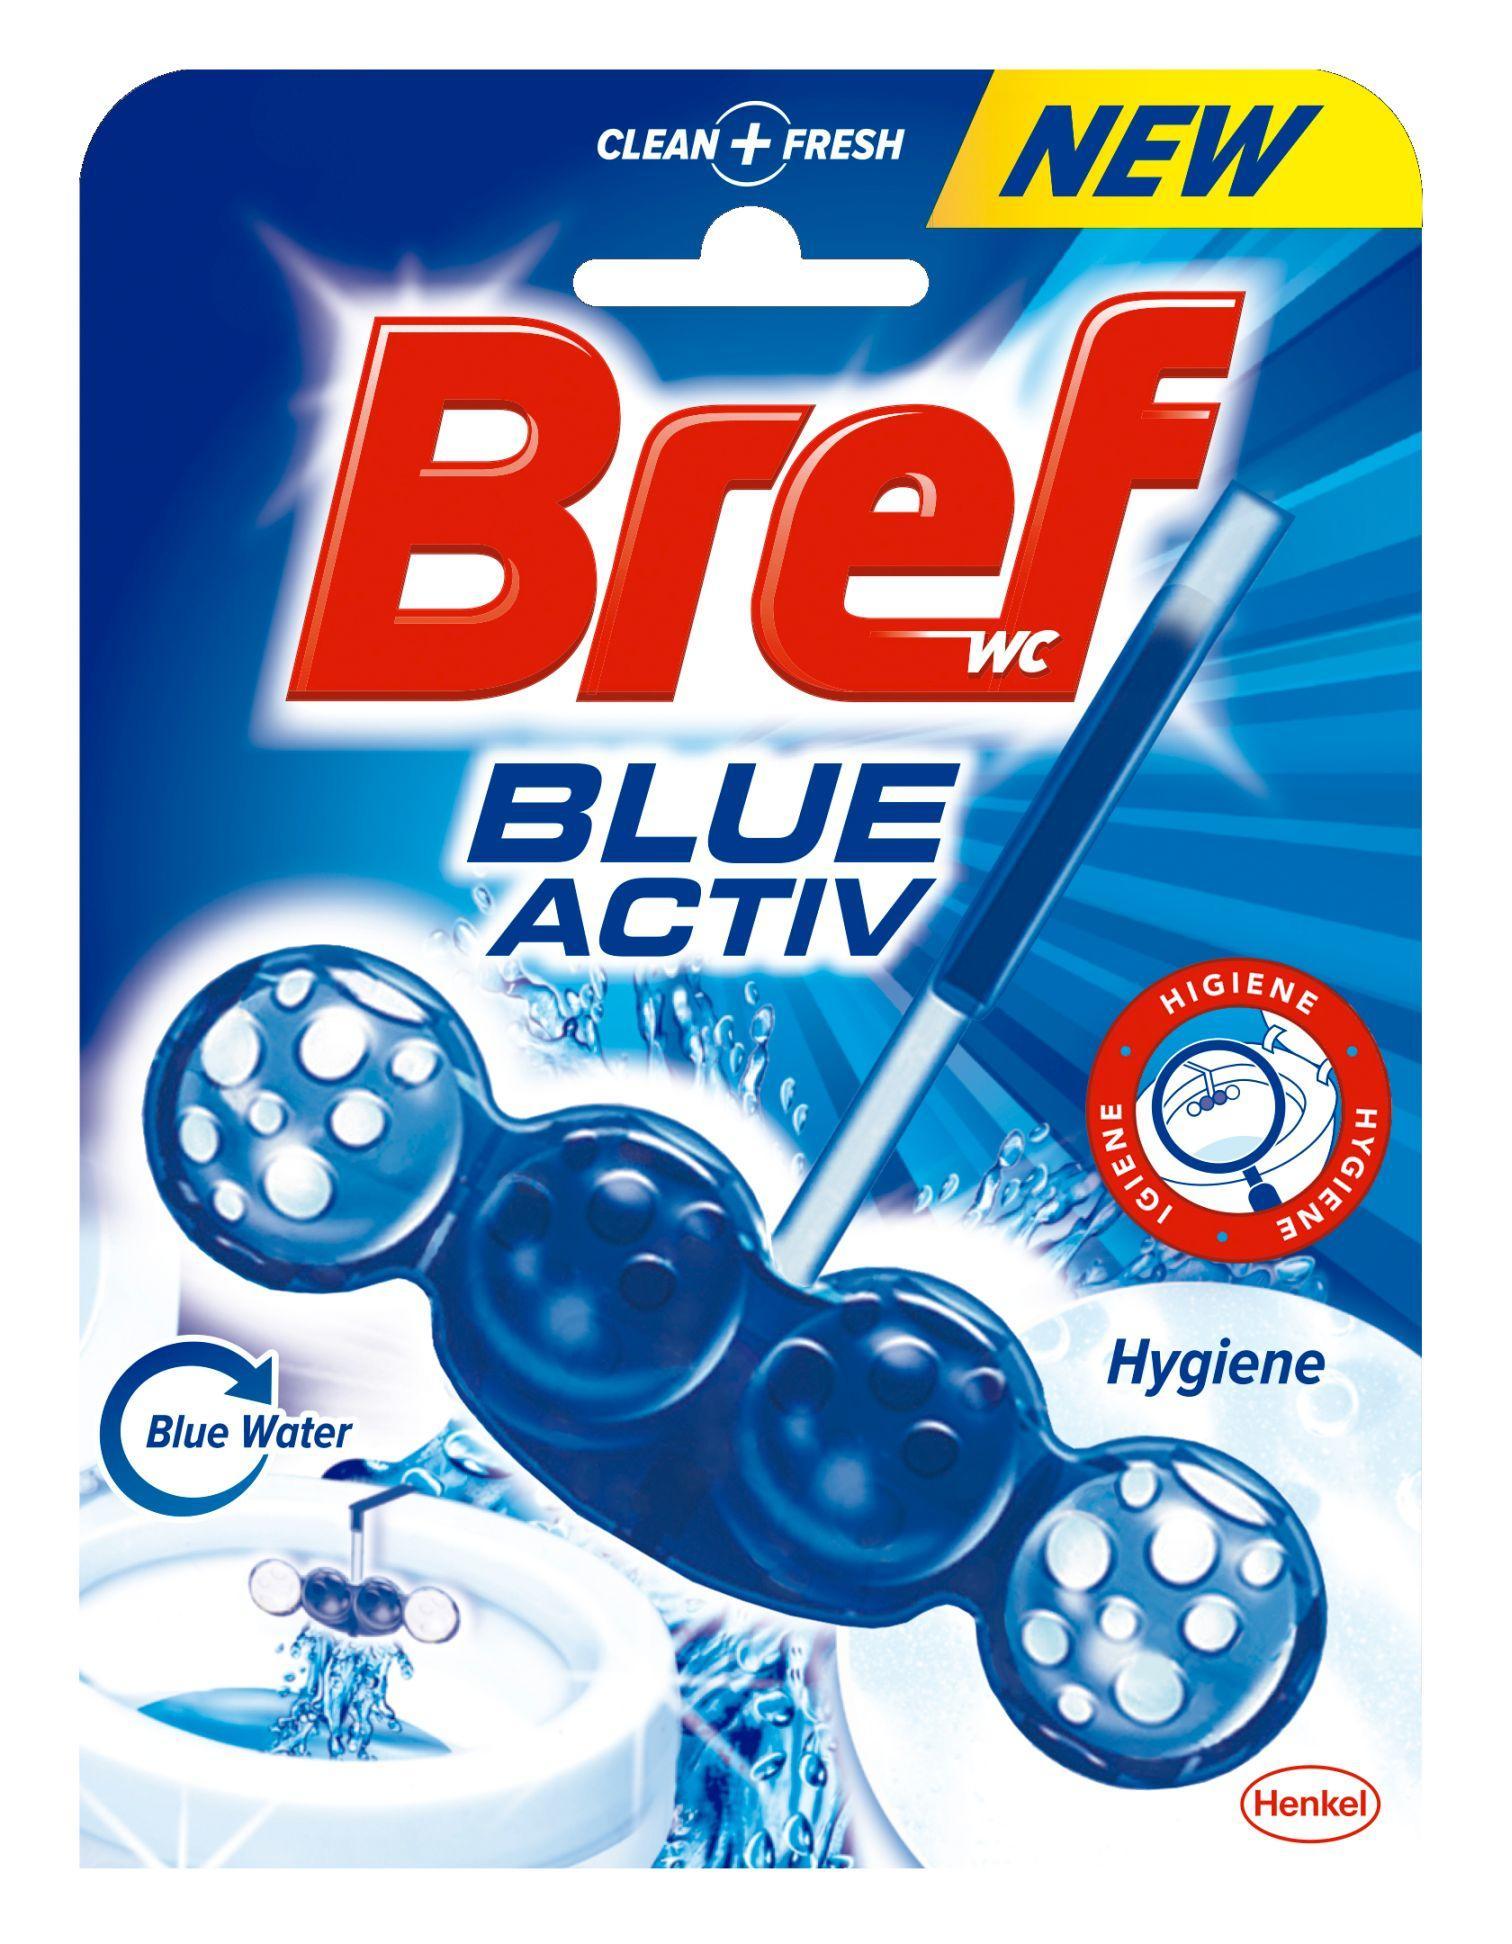 Wc Block, Blue Activ, Hygiene, Bref Wc (3x50g) 3pcs -40%